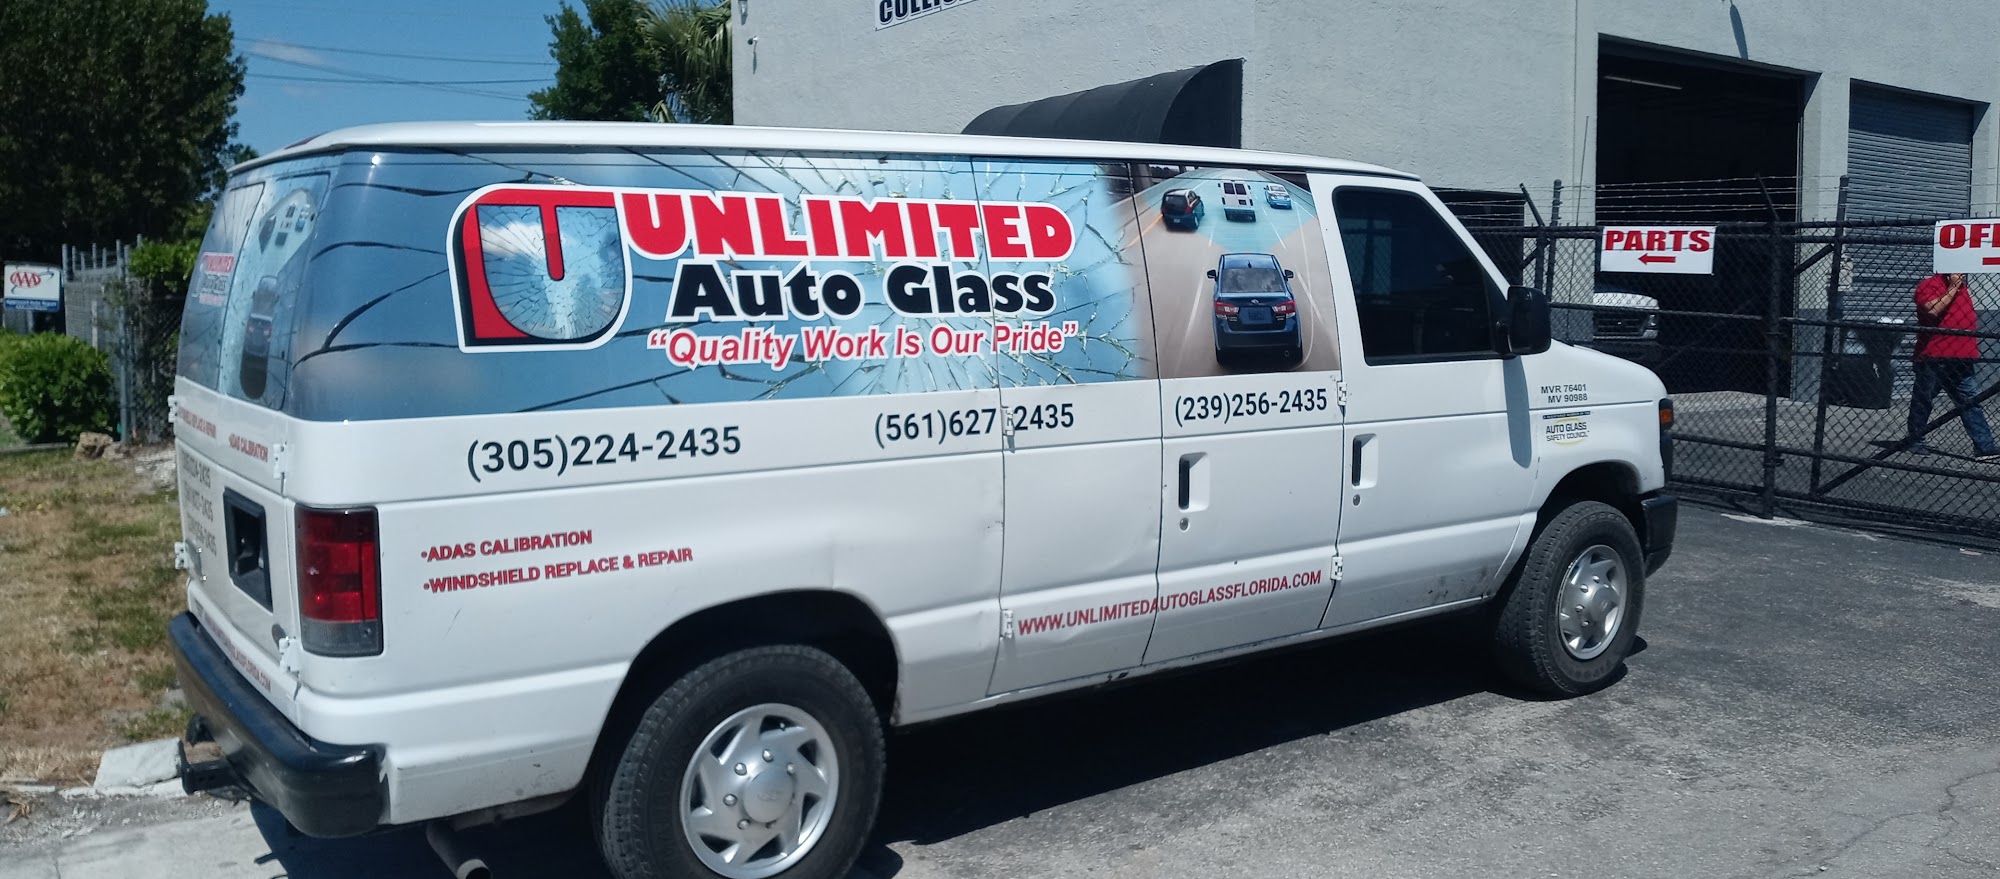 Unlimited auto glass